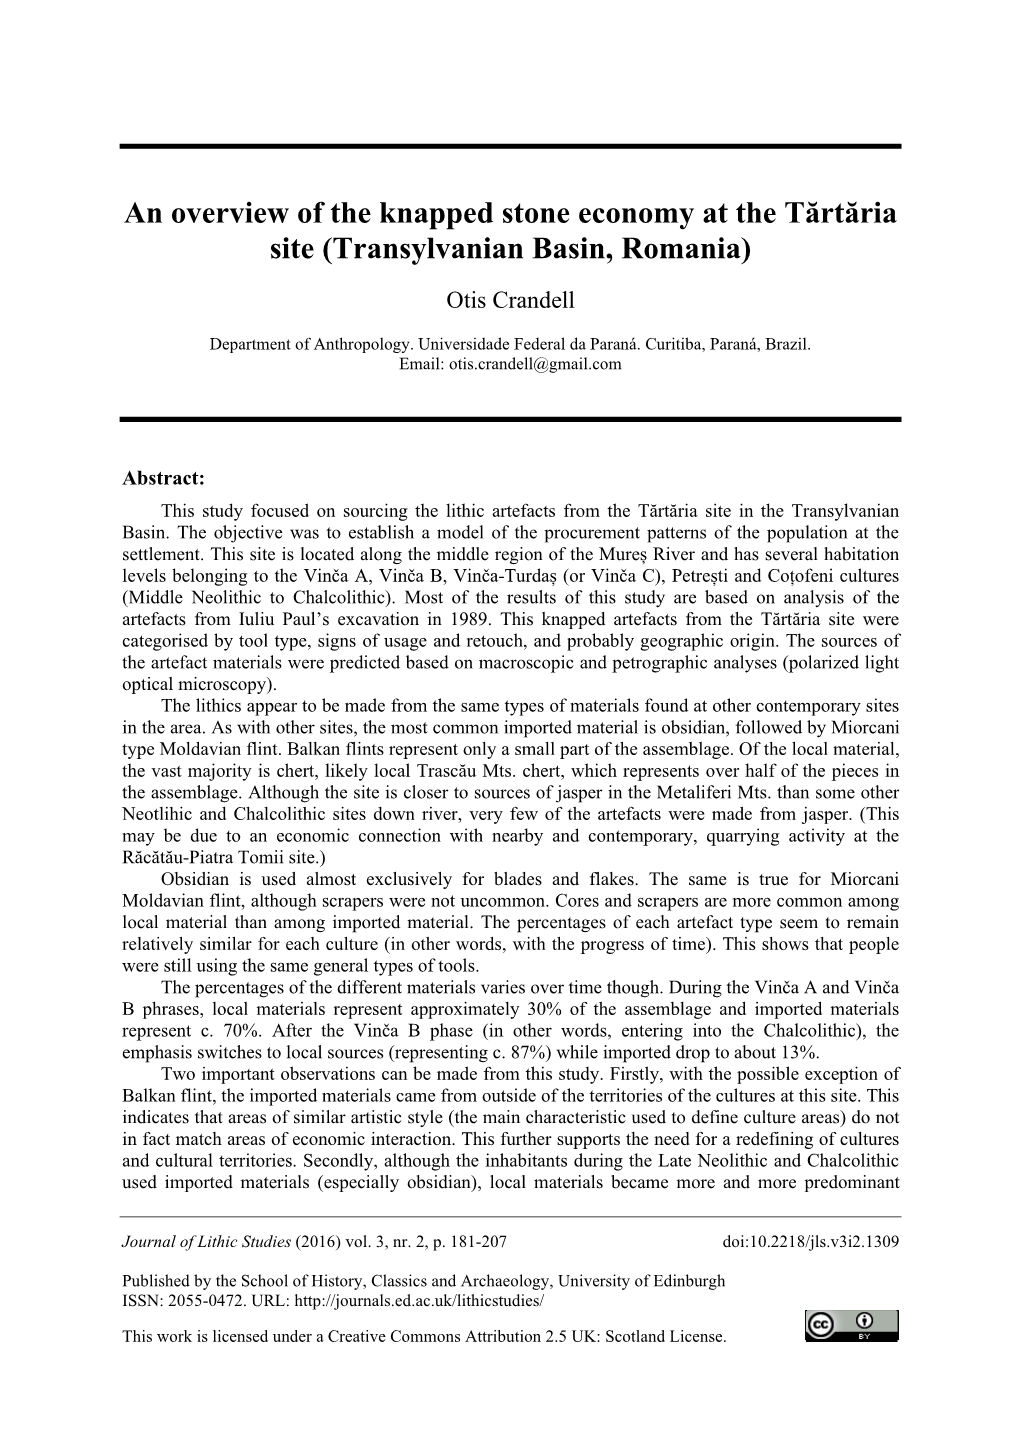 An Overview of the Knapped Stone Economy at the Tărtăria Site (Transylvanian Basin, Romania) Otis Crandell